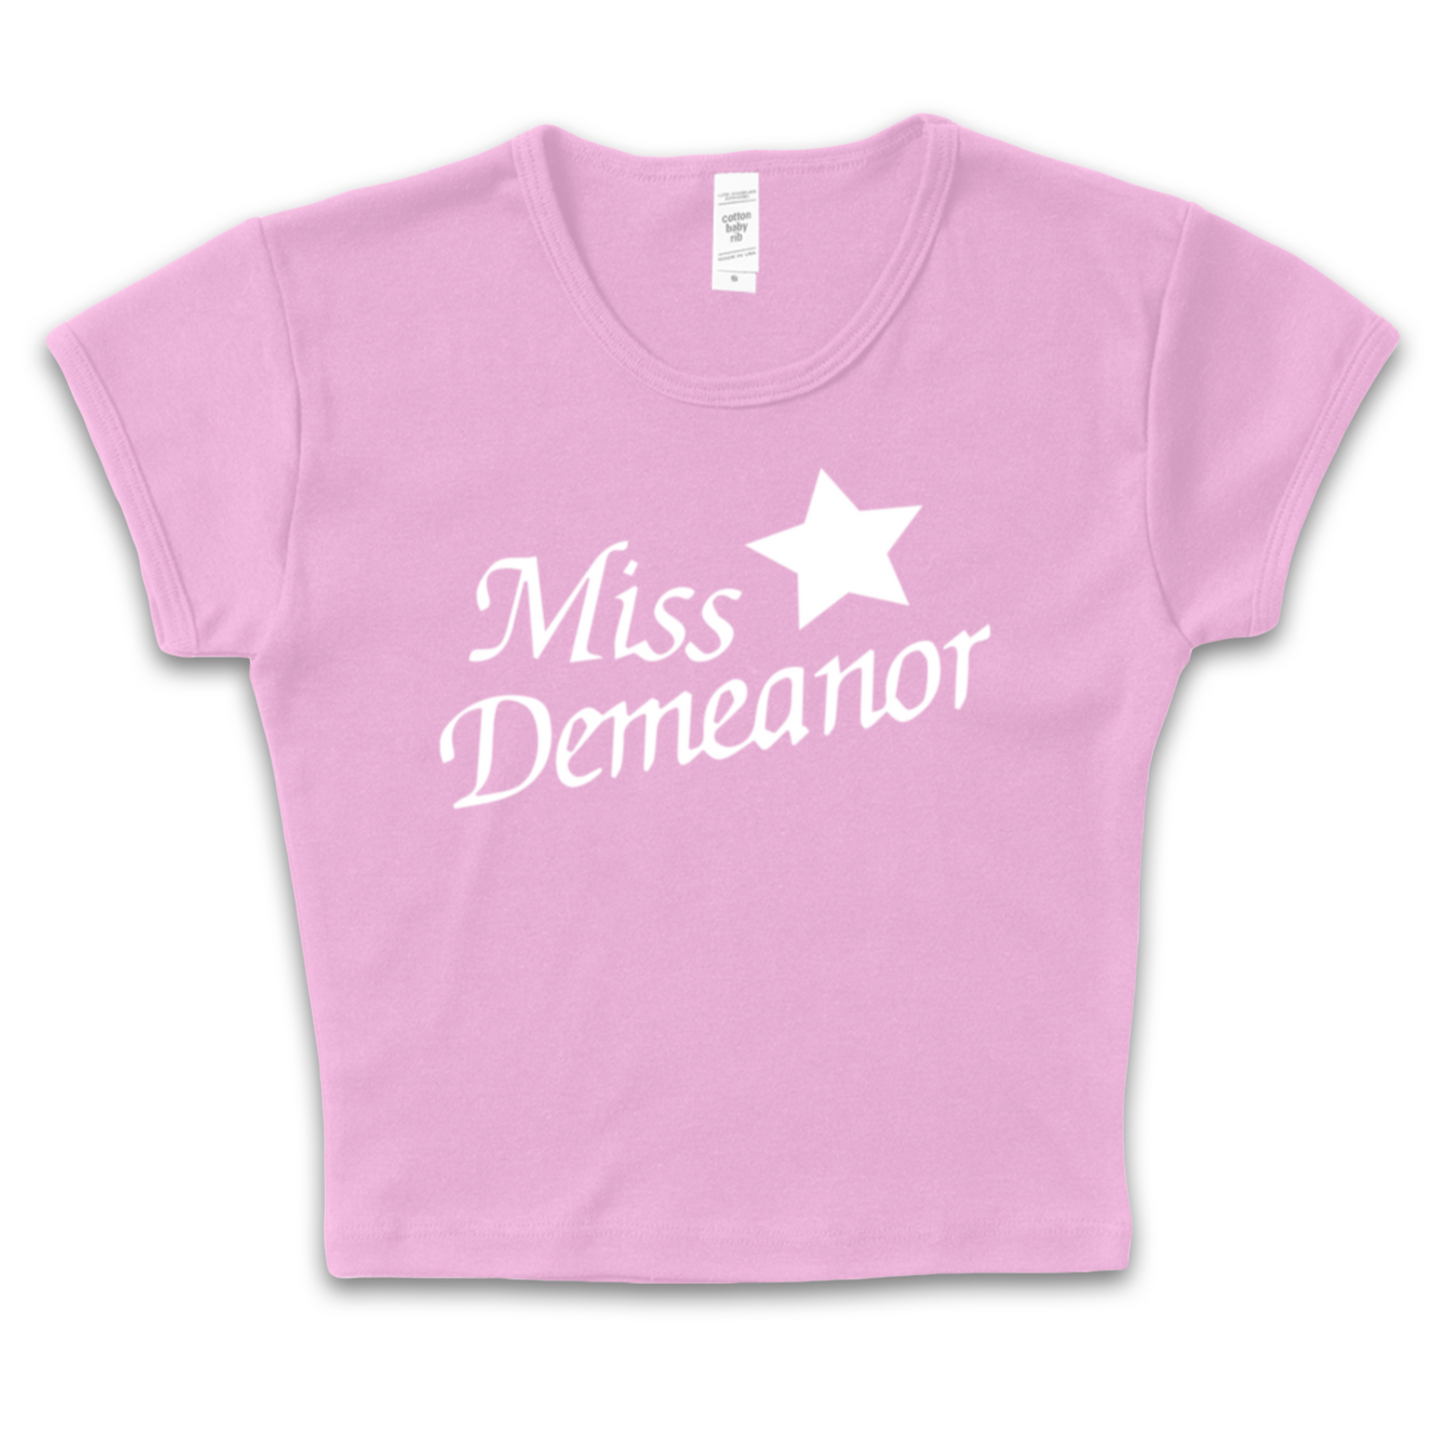 Miss Demeanor Baby Tee